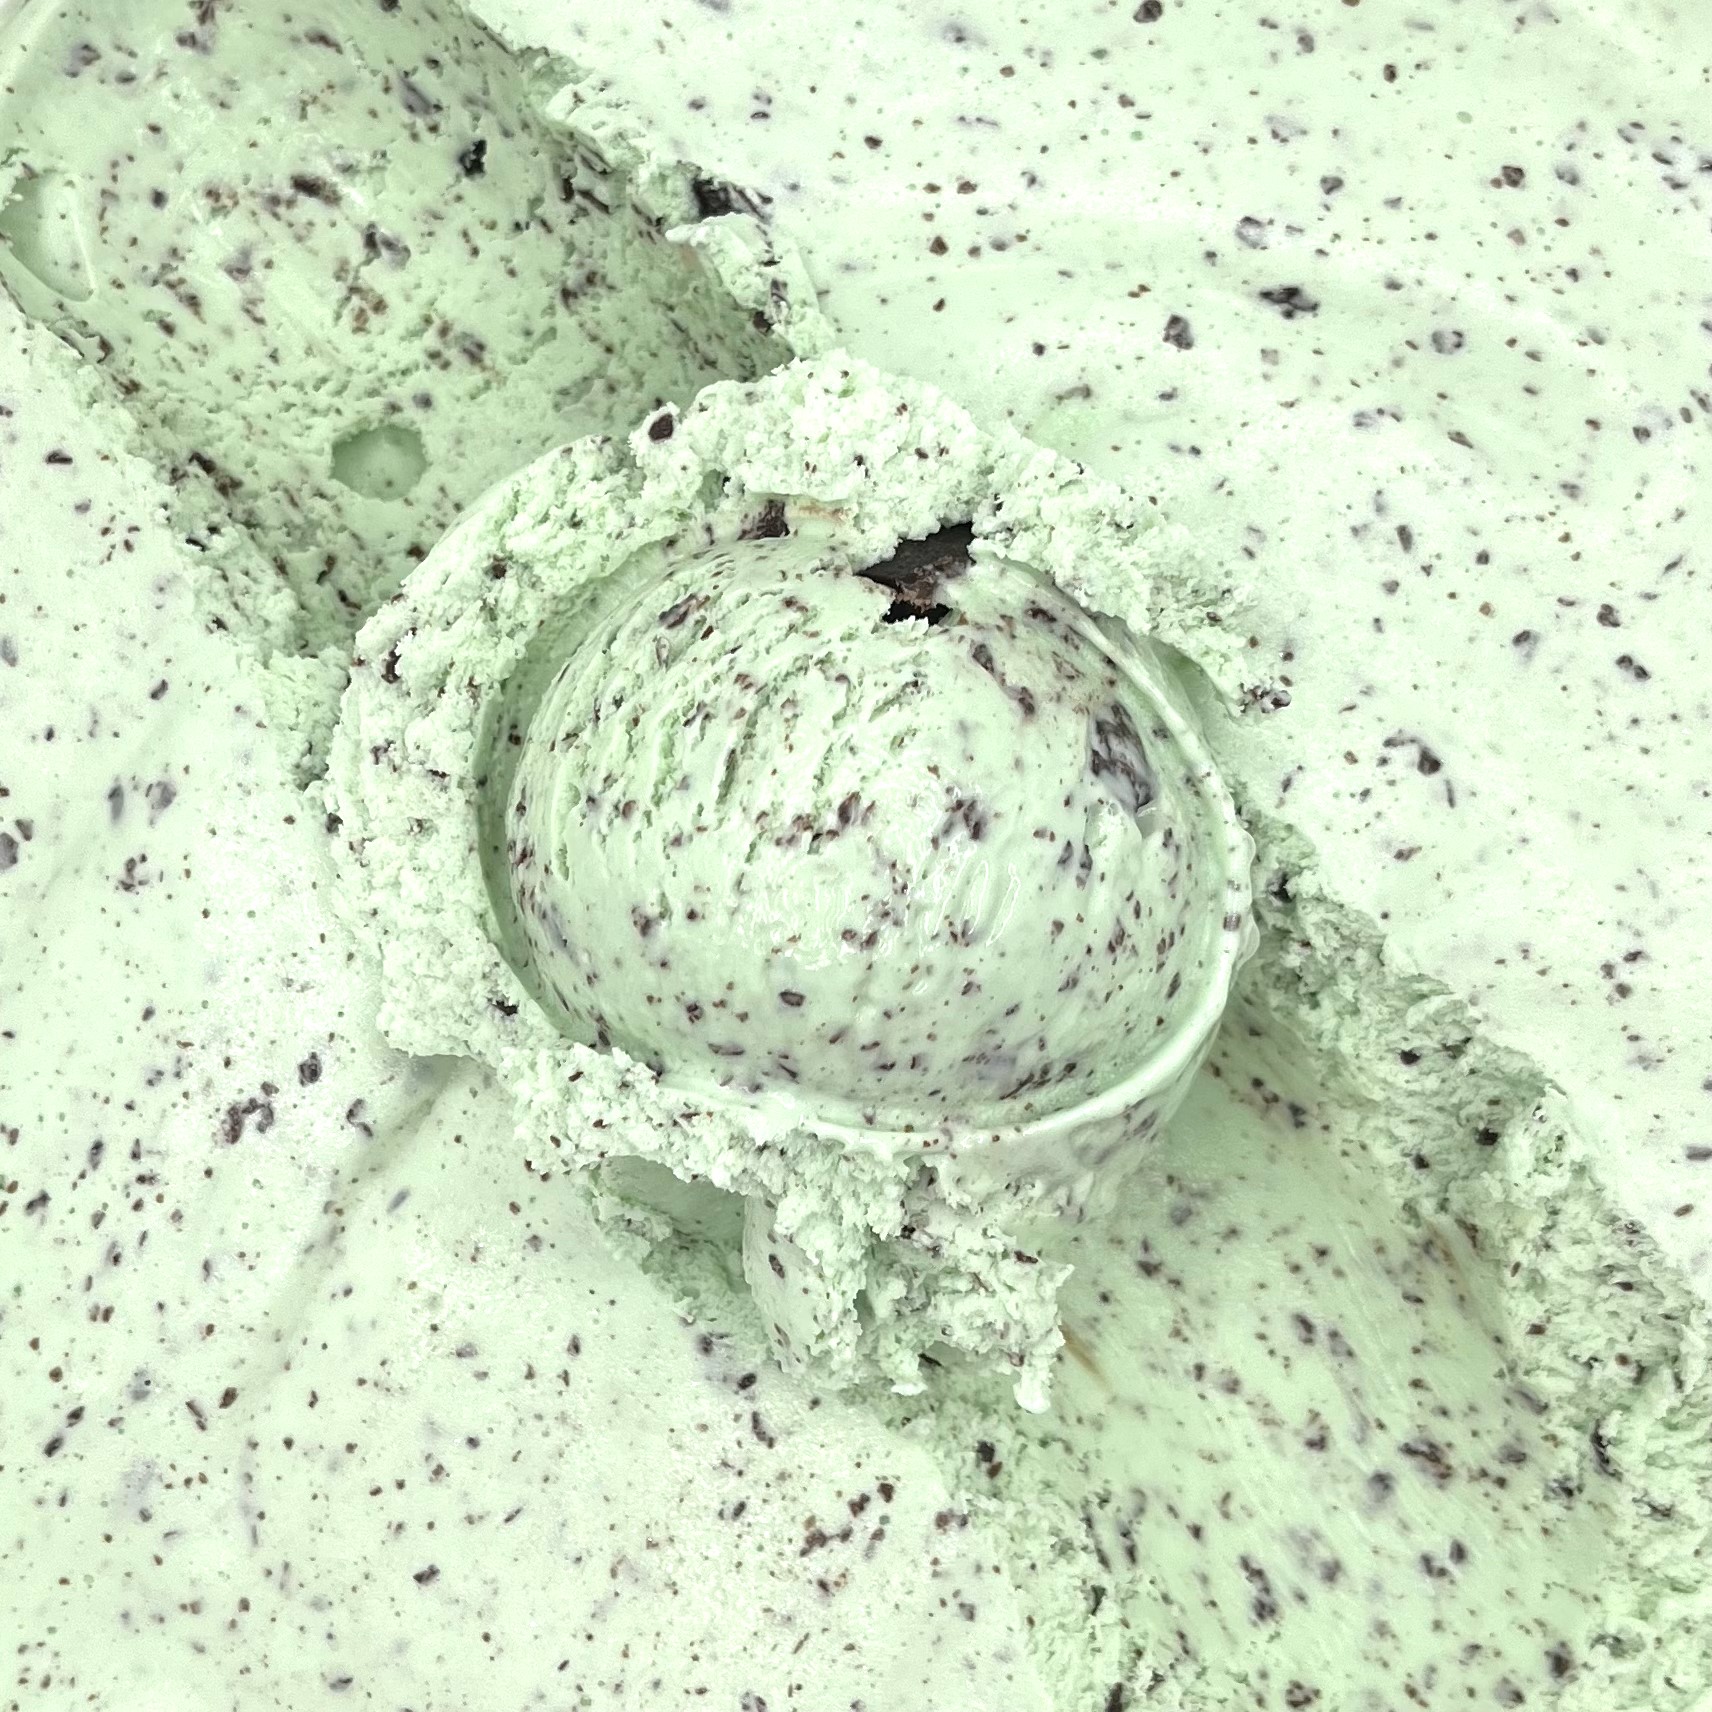 A scoop of Mint Chocolate Chunk ice cream